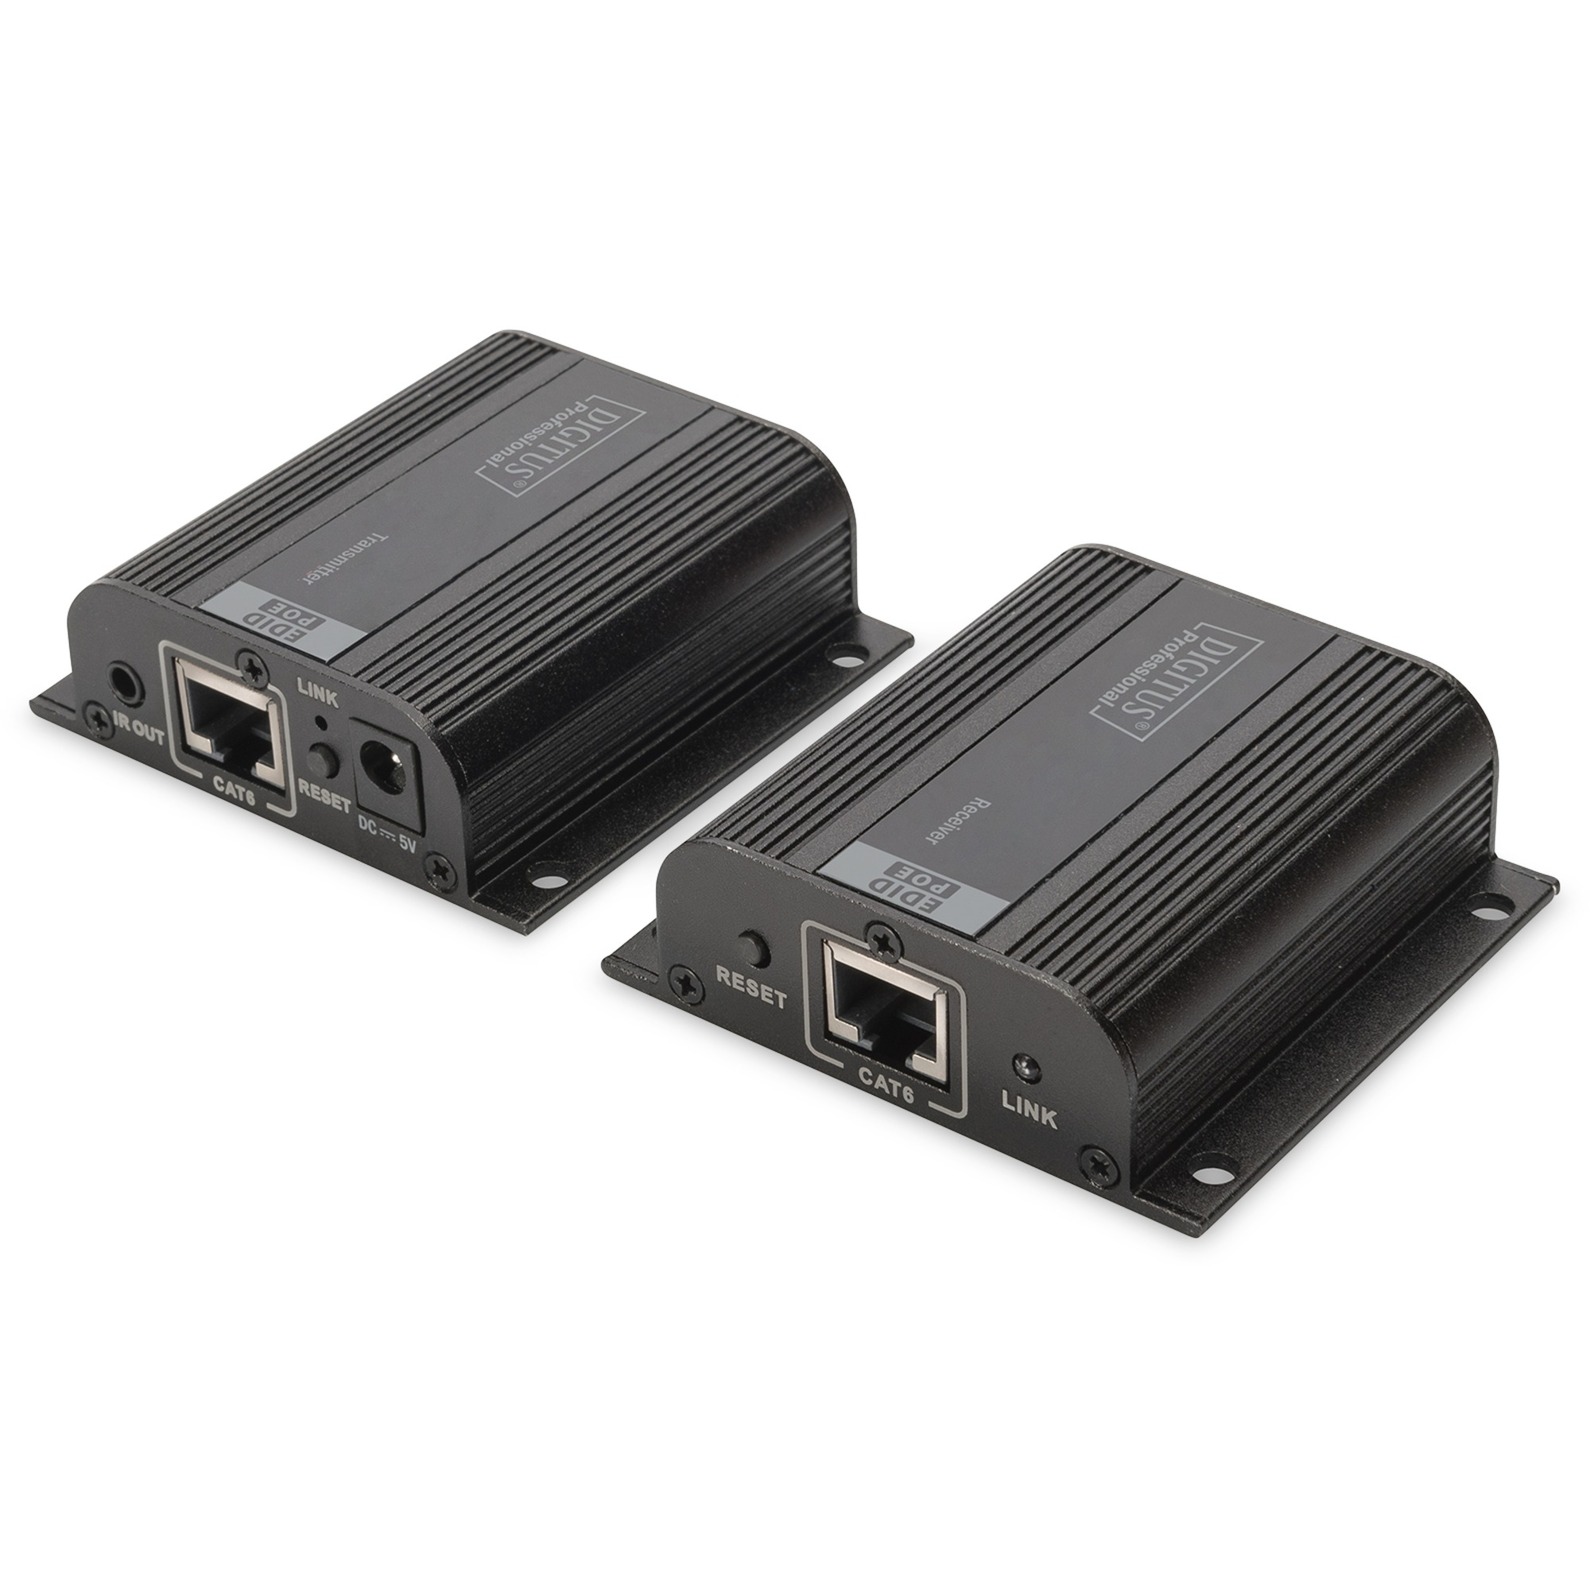 DS-55100-1 przed?u?acz AV AV transmitter & receiver Czarny, HDMI extension